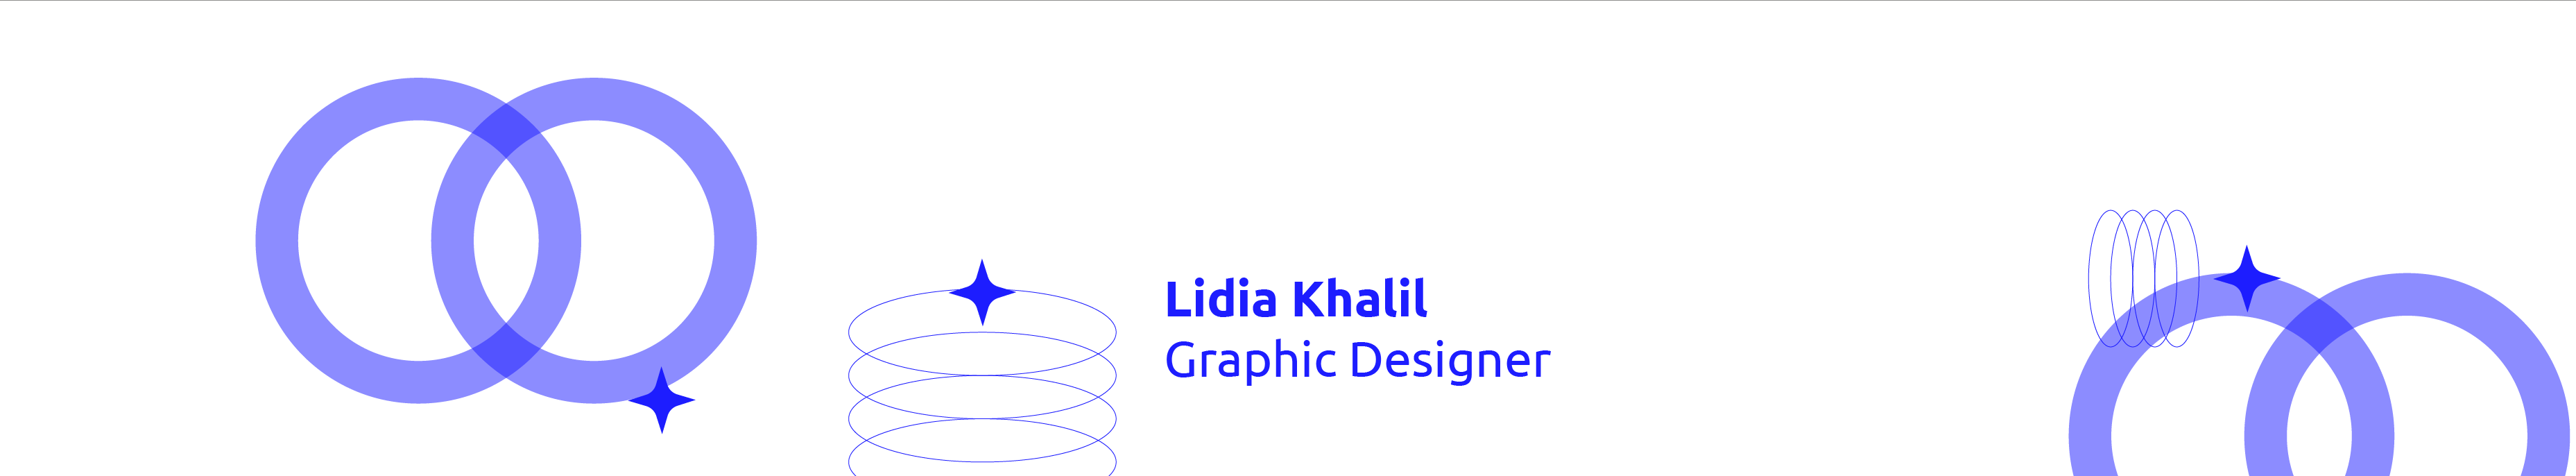 Lidia Khalil's profile banner